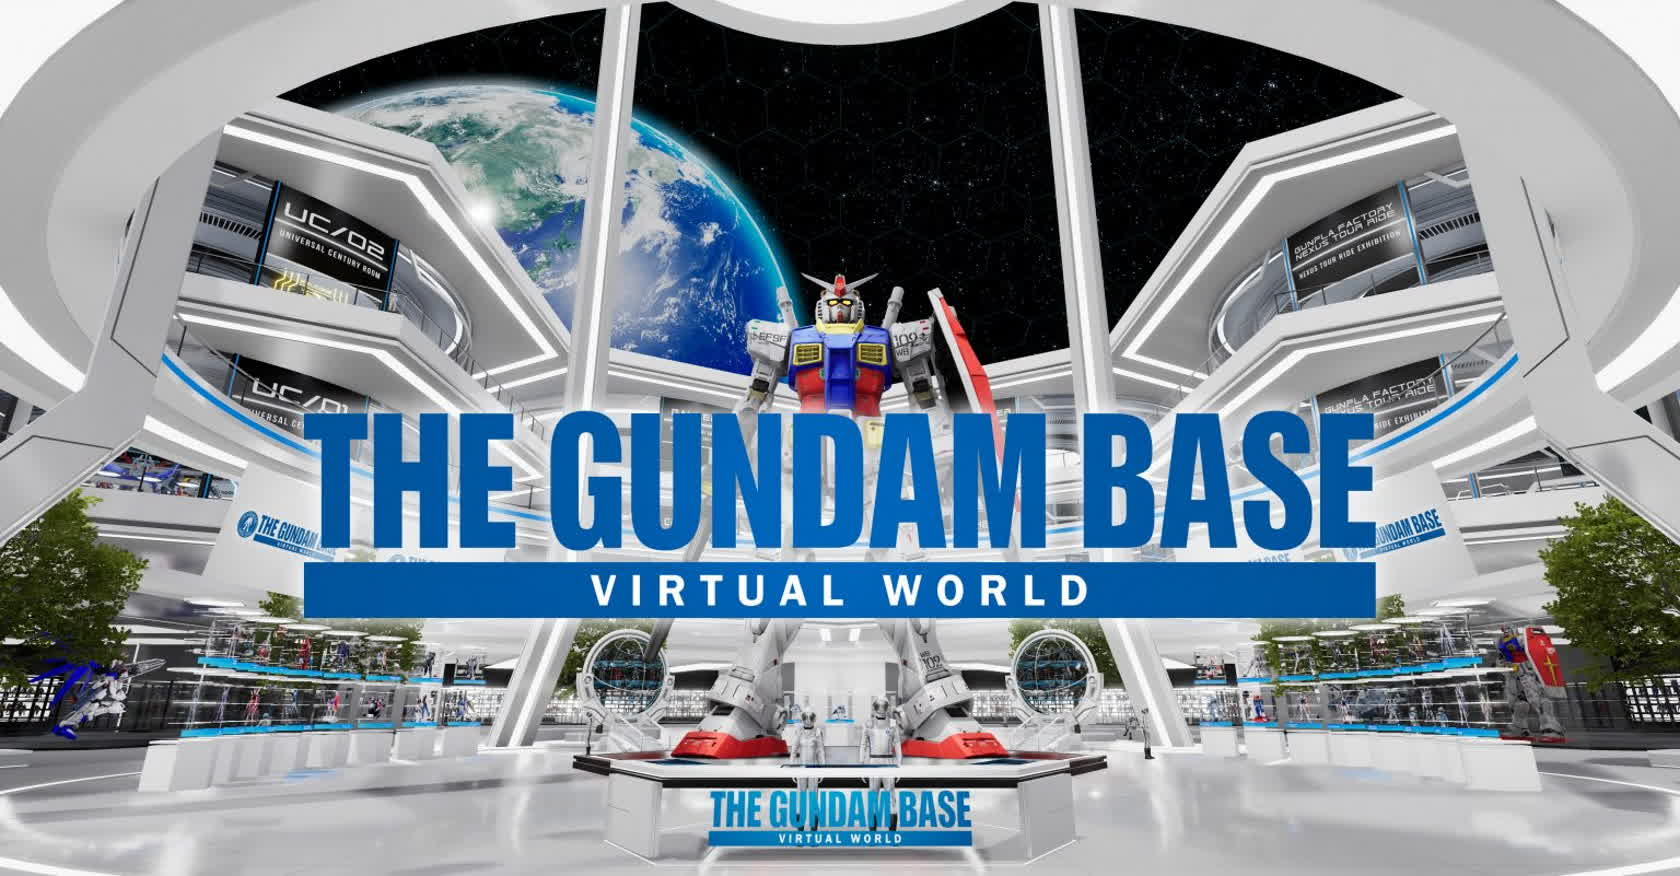 Bandai Namco plans a Gundam metaverse composed of virtual space colonies